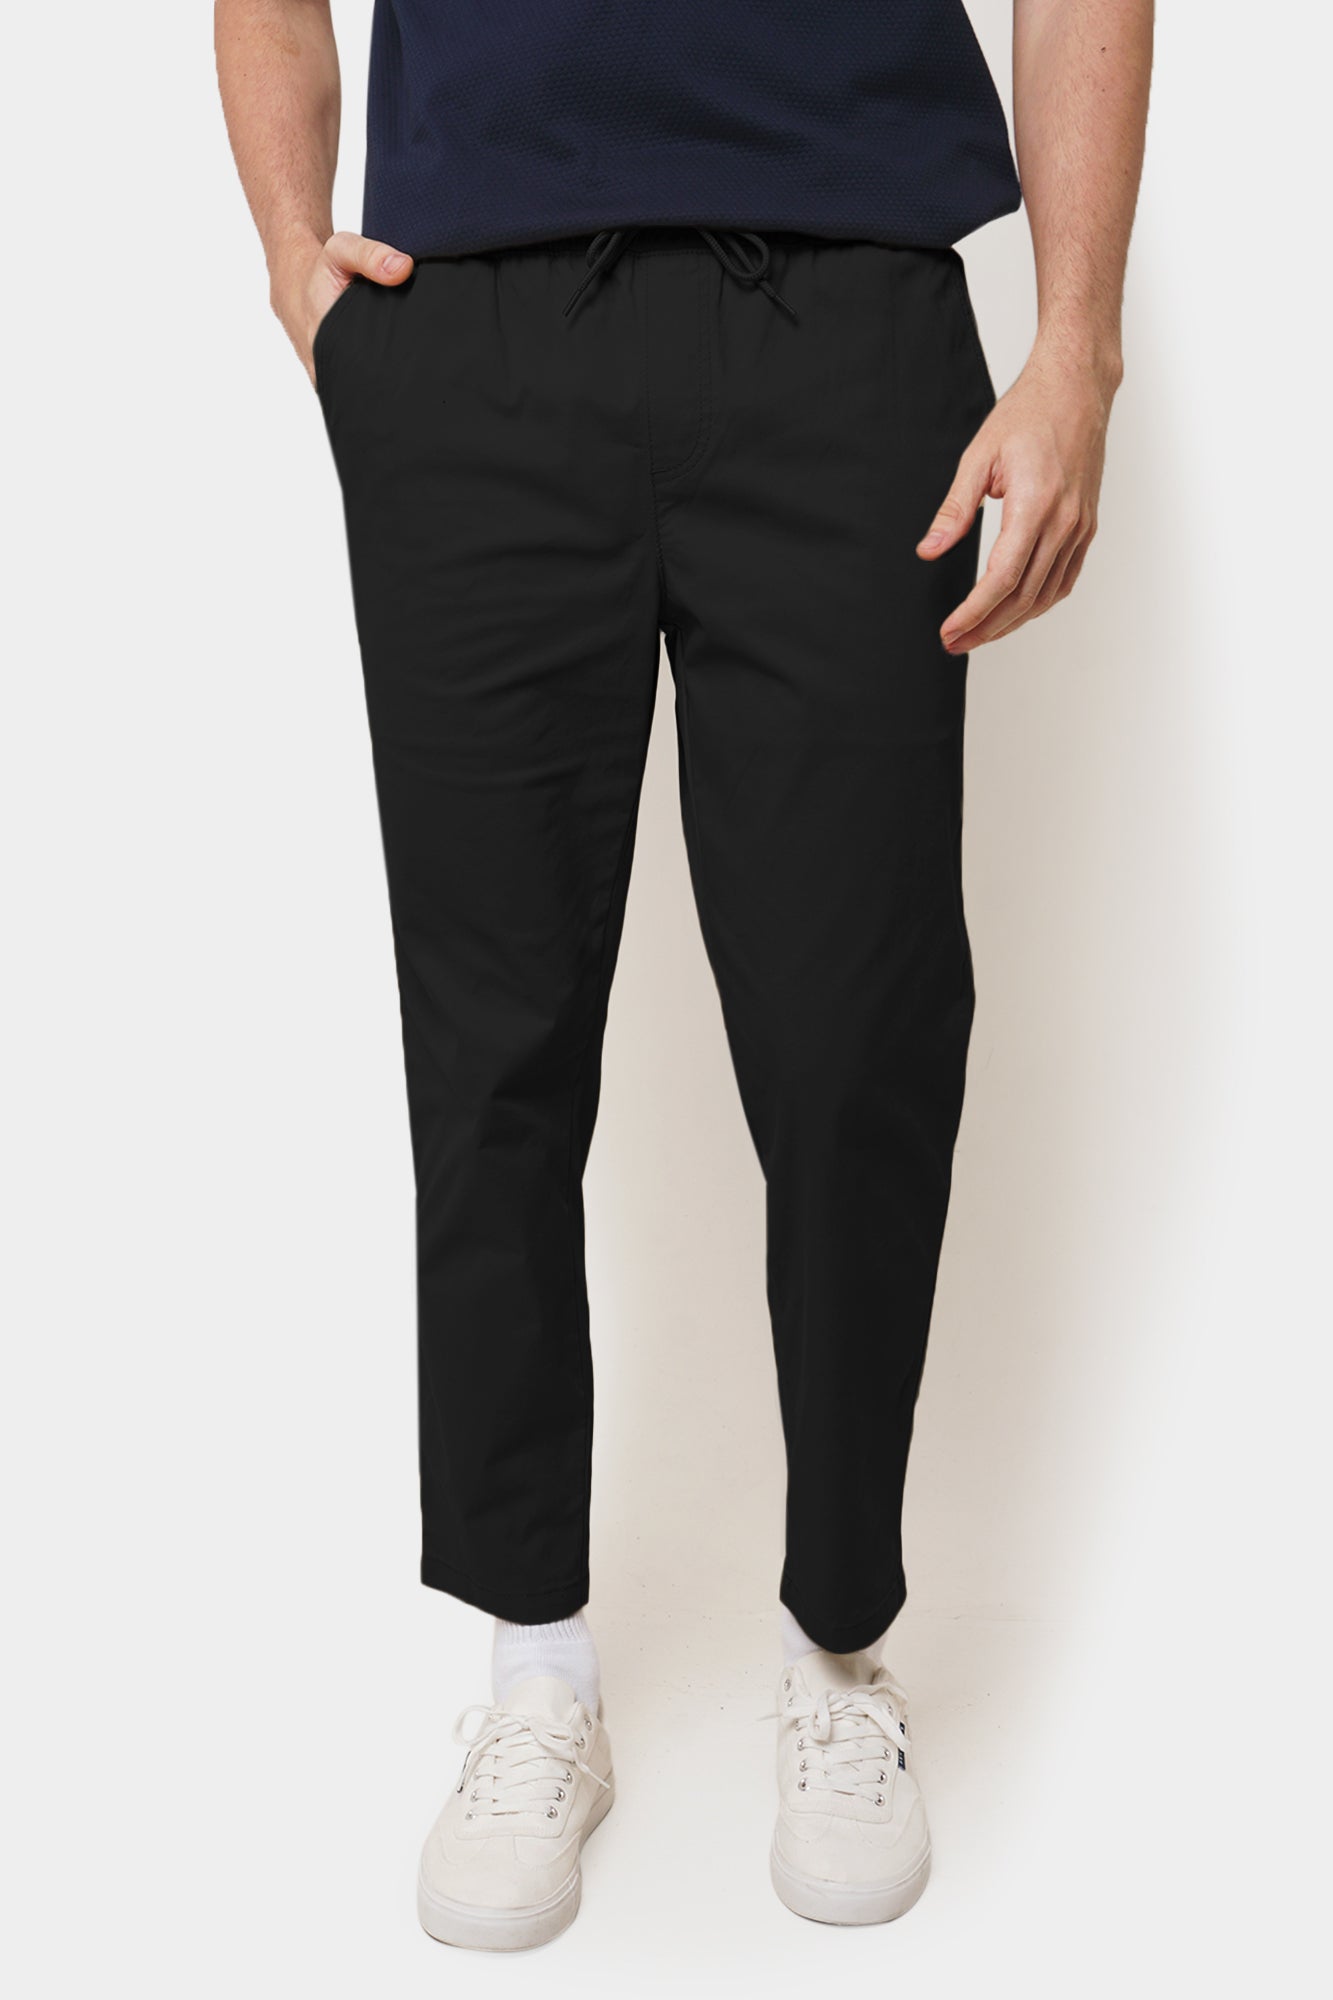 Zakheera Black Men Ankle Fit Formal Trouser, Handwash, Size:  28.30.32.34.36.38